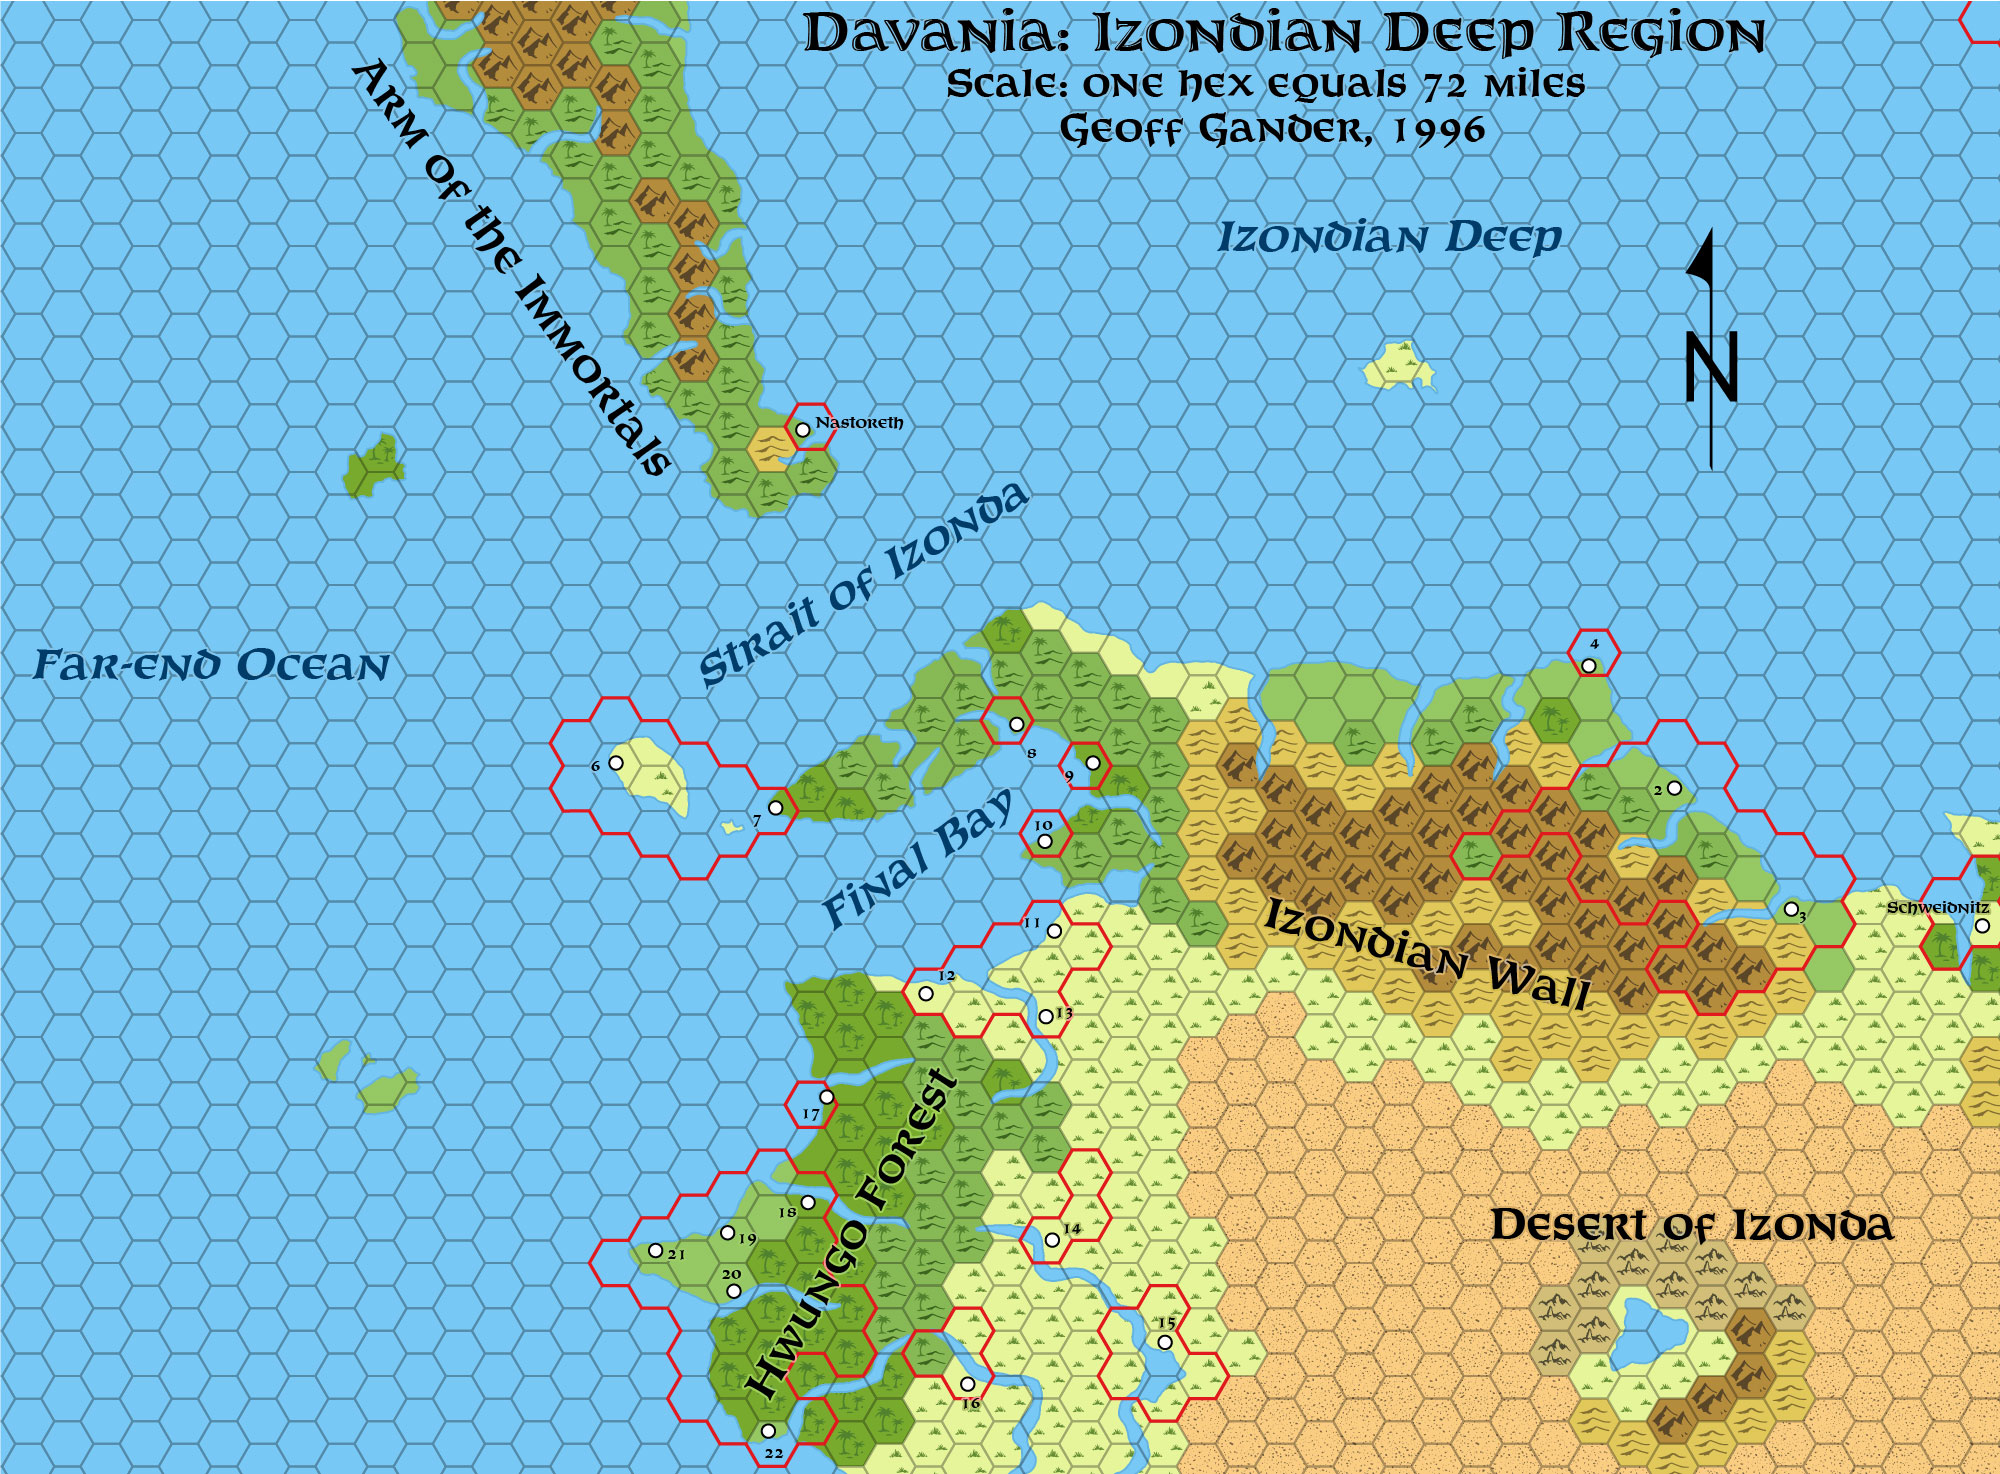 Standardised replica of Geoff Gander’s Davania: Izondian Deep, 72 miles per hex